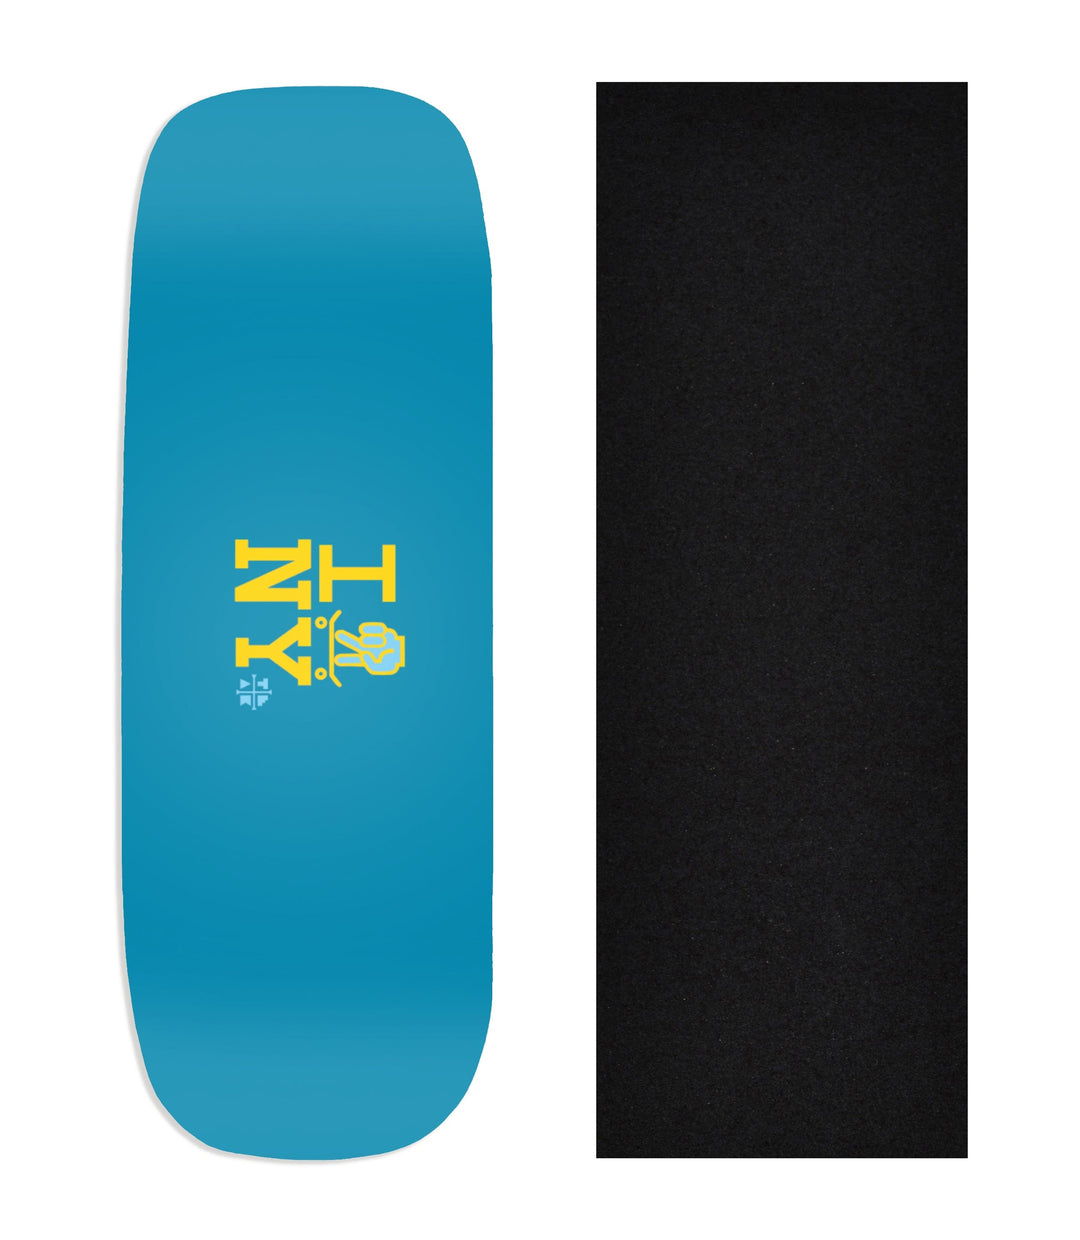 Teak Tuning Heat Transfer Graphic Wooden Fingerboard Deck, "I Skate NY" (Blue) Boxy Deck